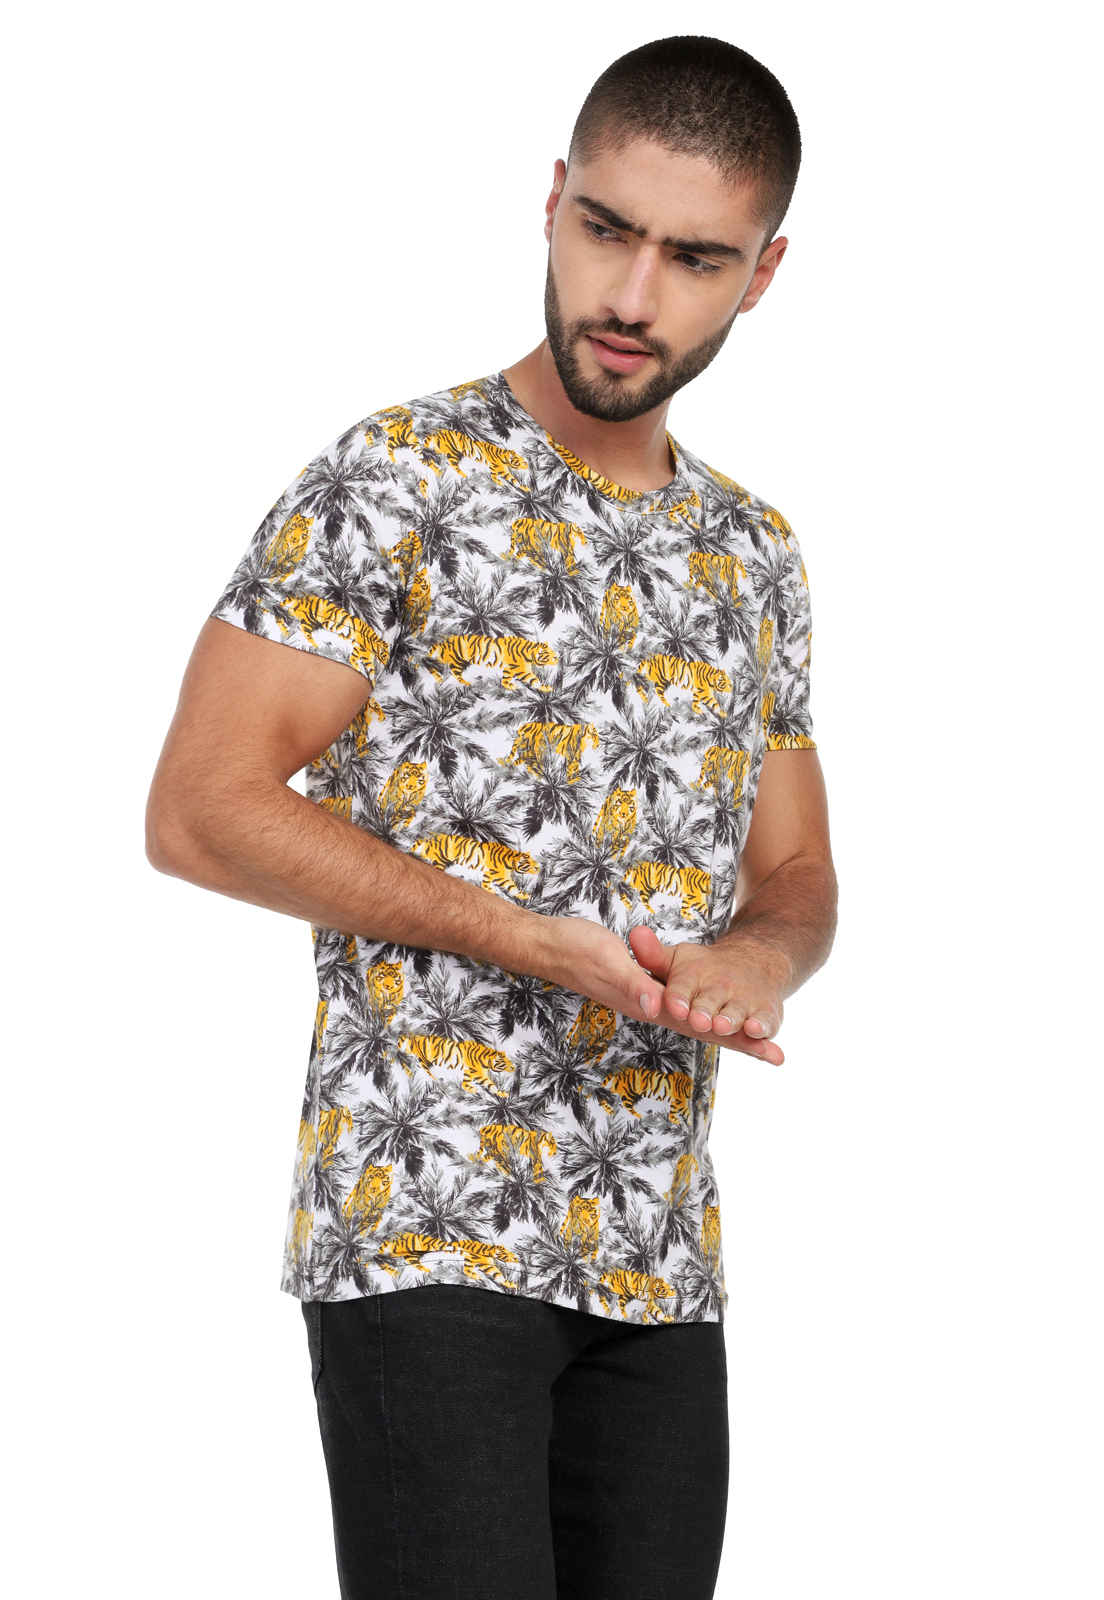 Xxxx Xxxx 2016 Bk Mp4 - T-shirt para hombre sublimada jungle gris, blanca, amarillo - Rachid Style